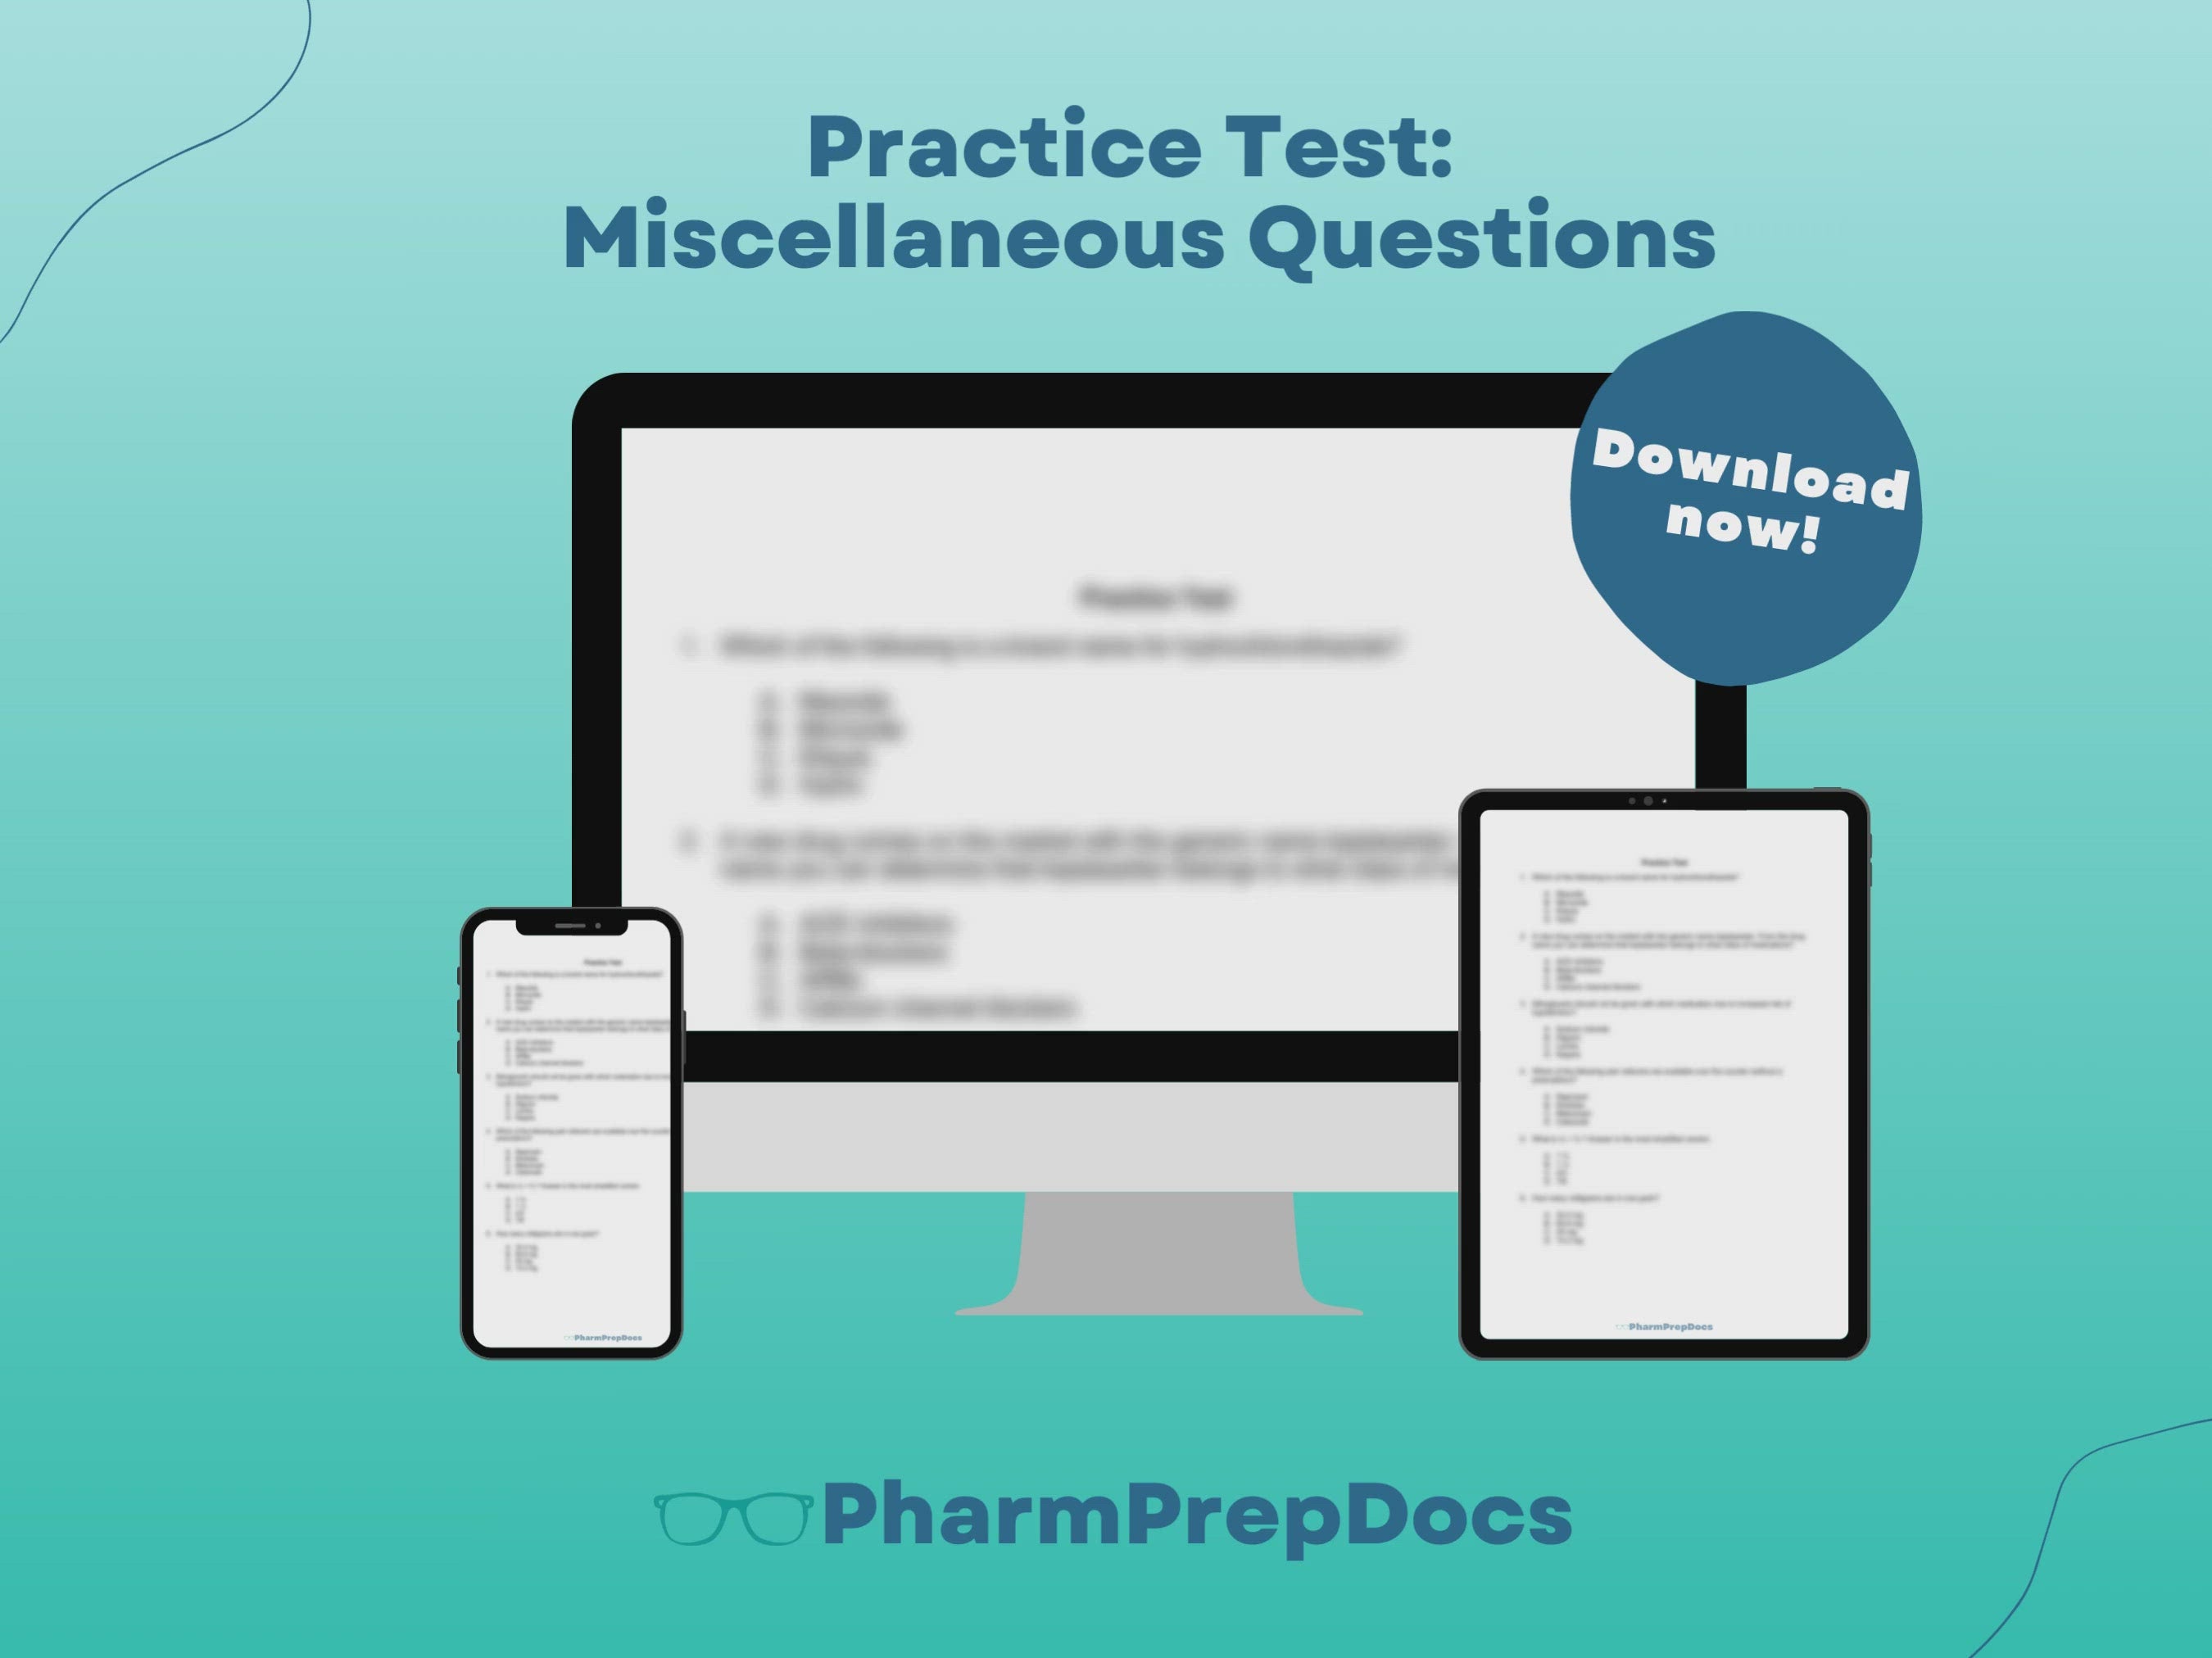 Practice Test: Miscellaneous Questions